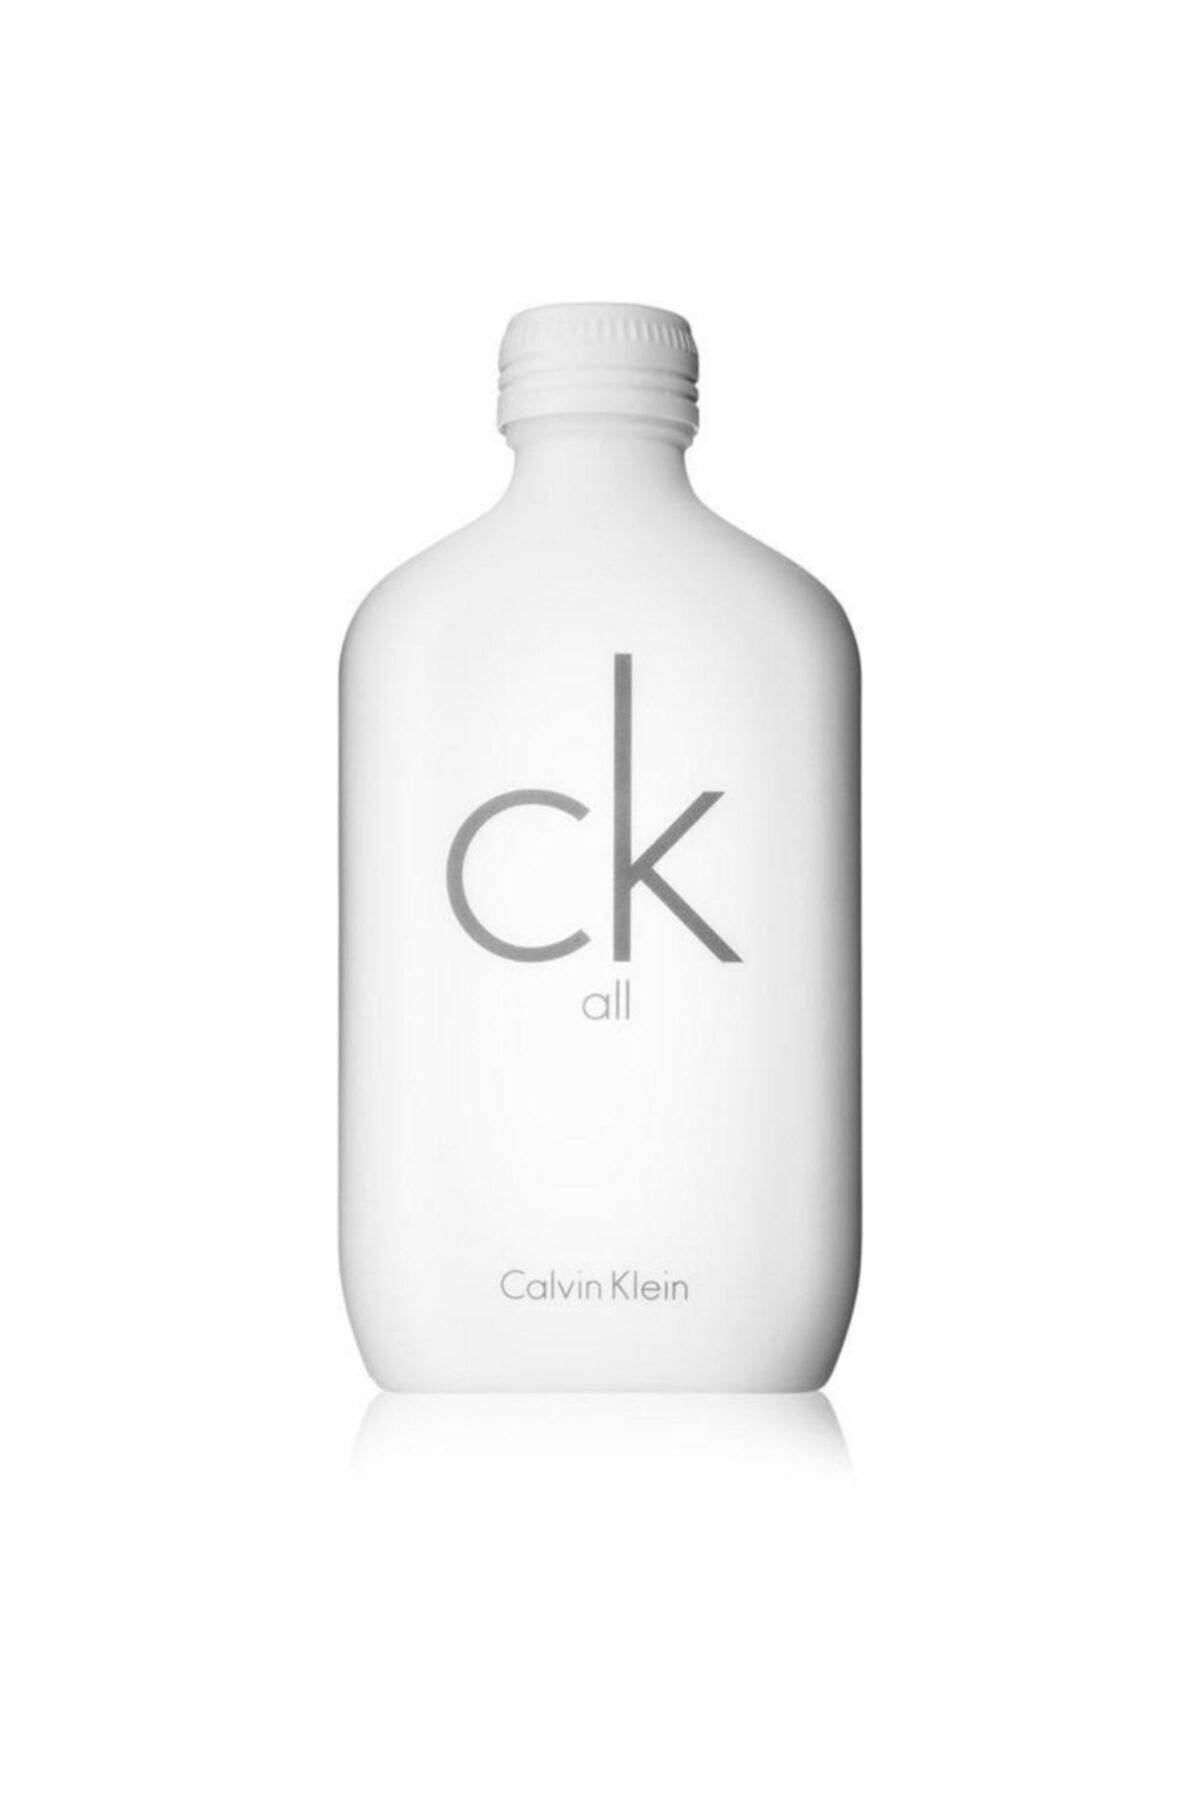 Calvin Klein عطر مردانه All ادوتویلت 200 ml